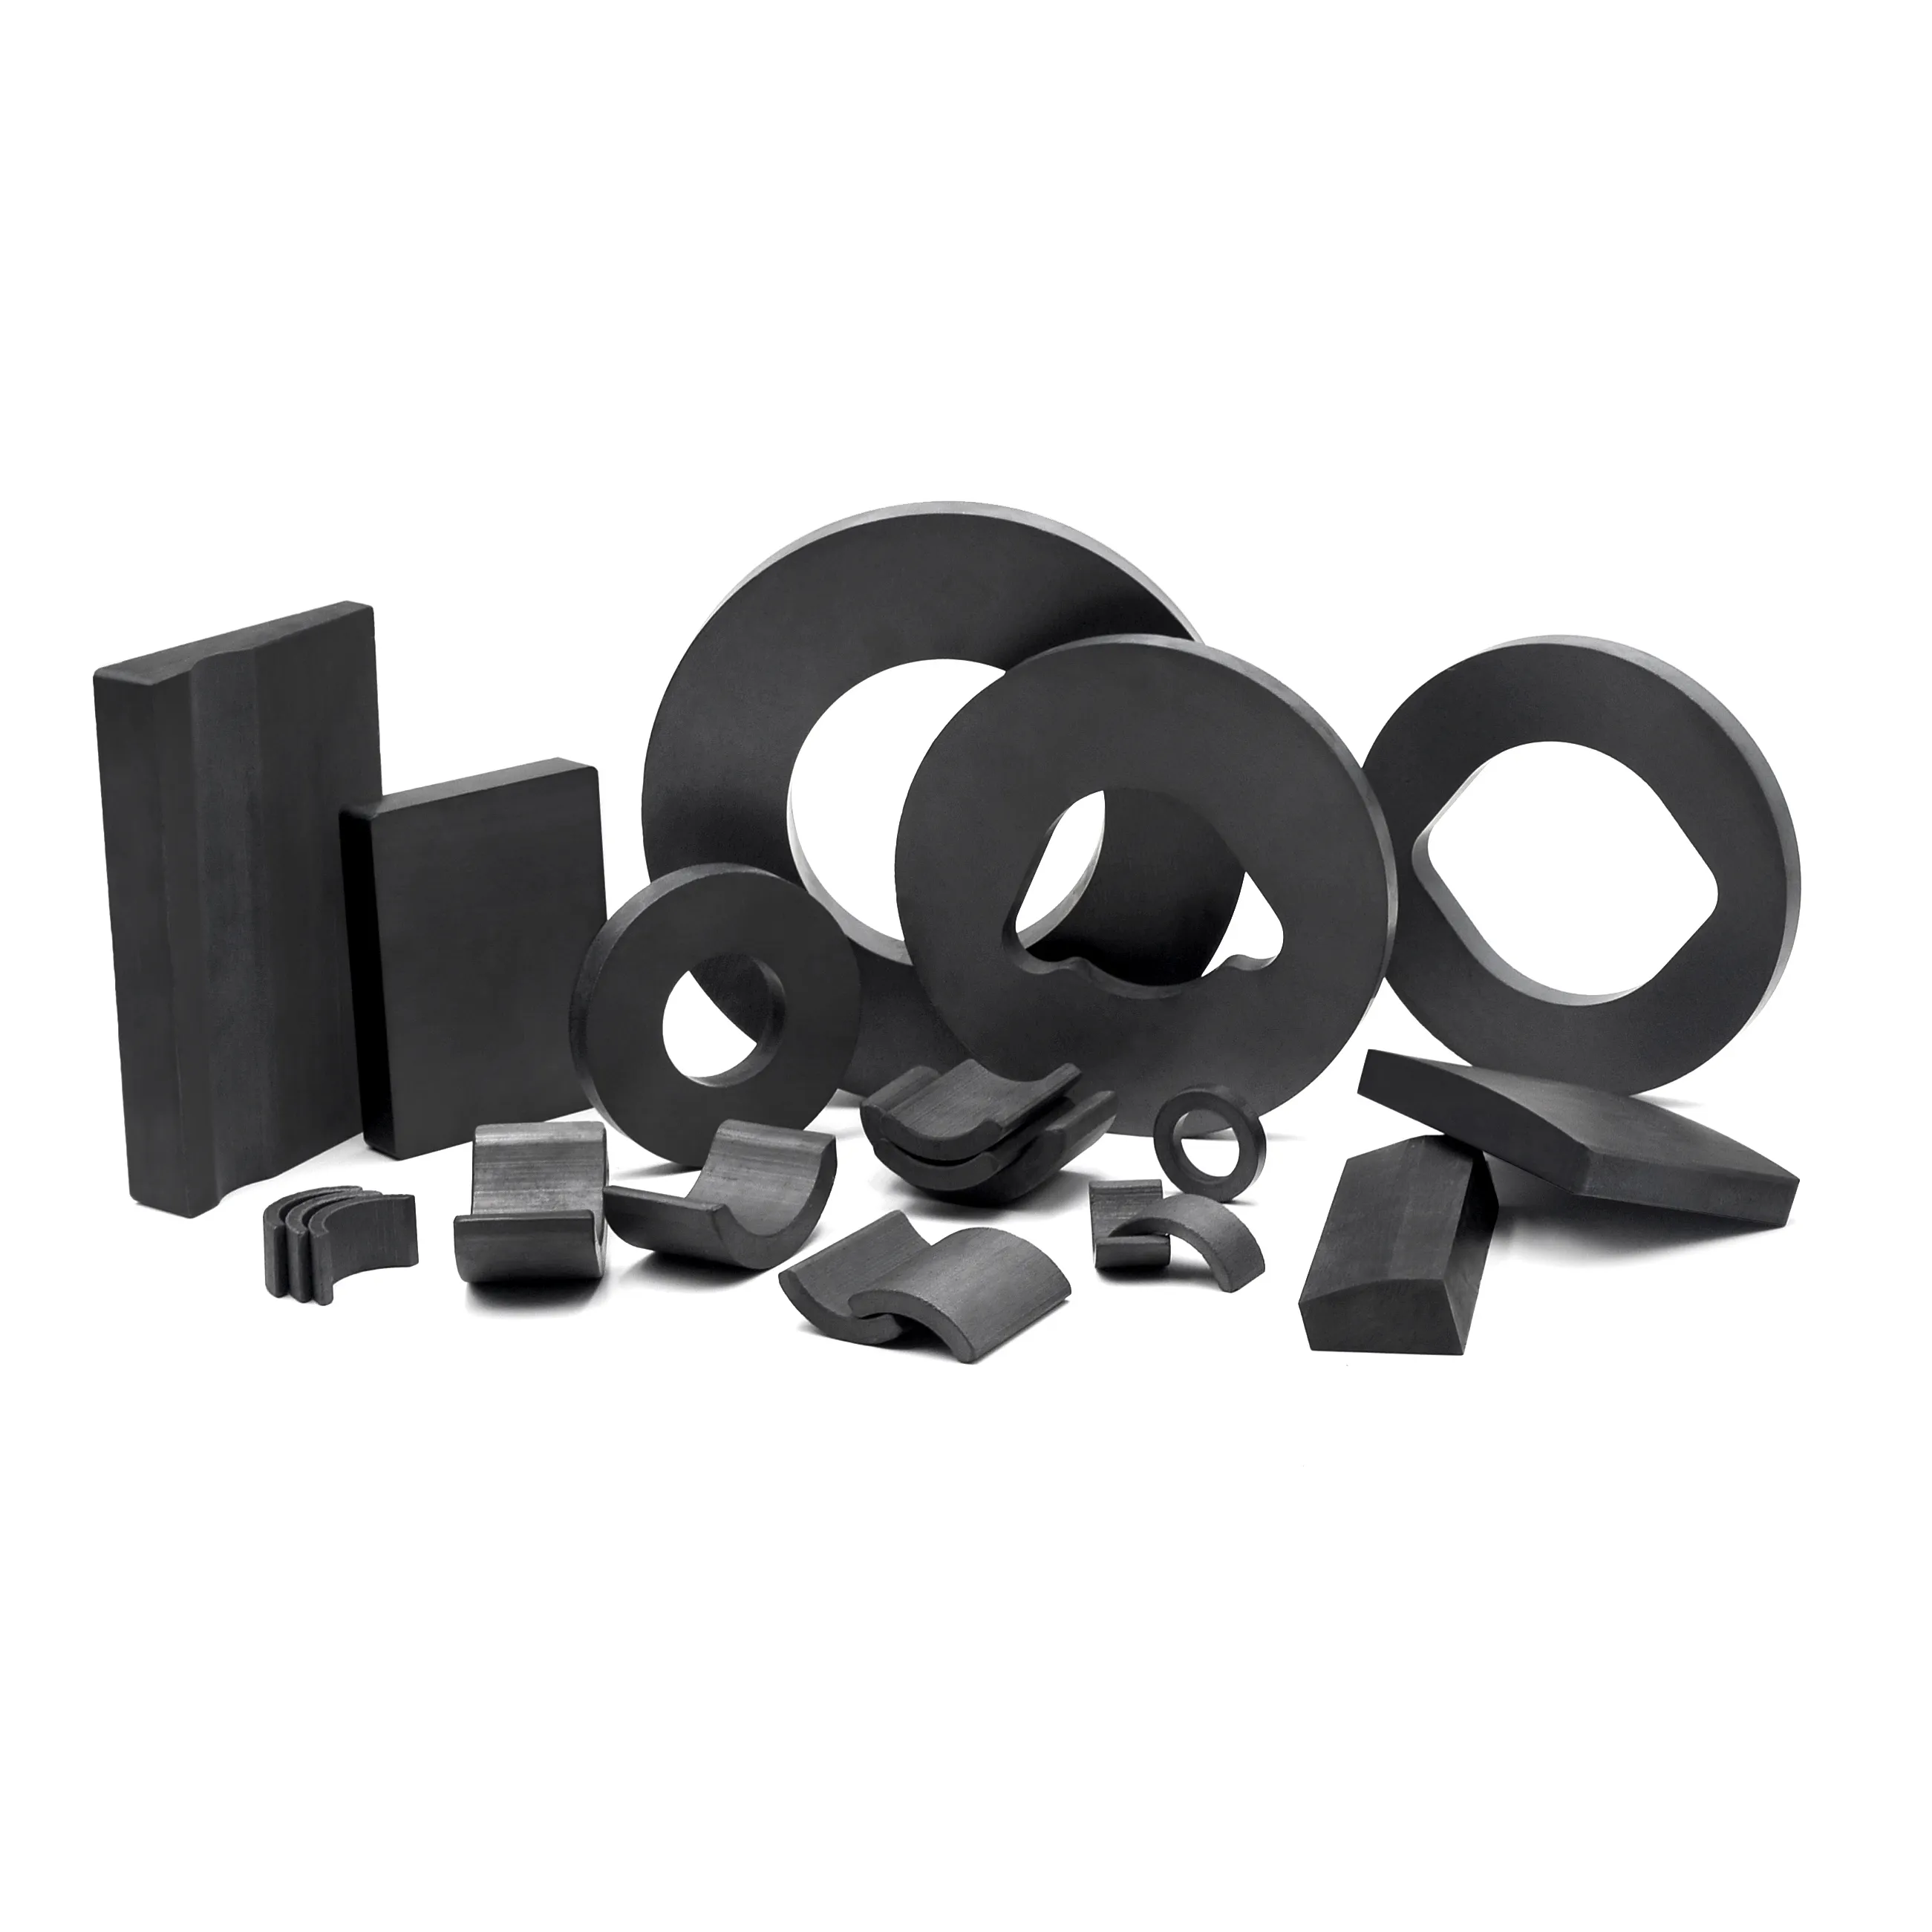 Factory Price Industrial China Magnet Manufacturer Large Round Disc Ring Arc Bar Block Ceramic Ferrite Magnet For Loud Speakers